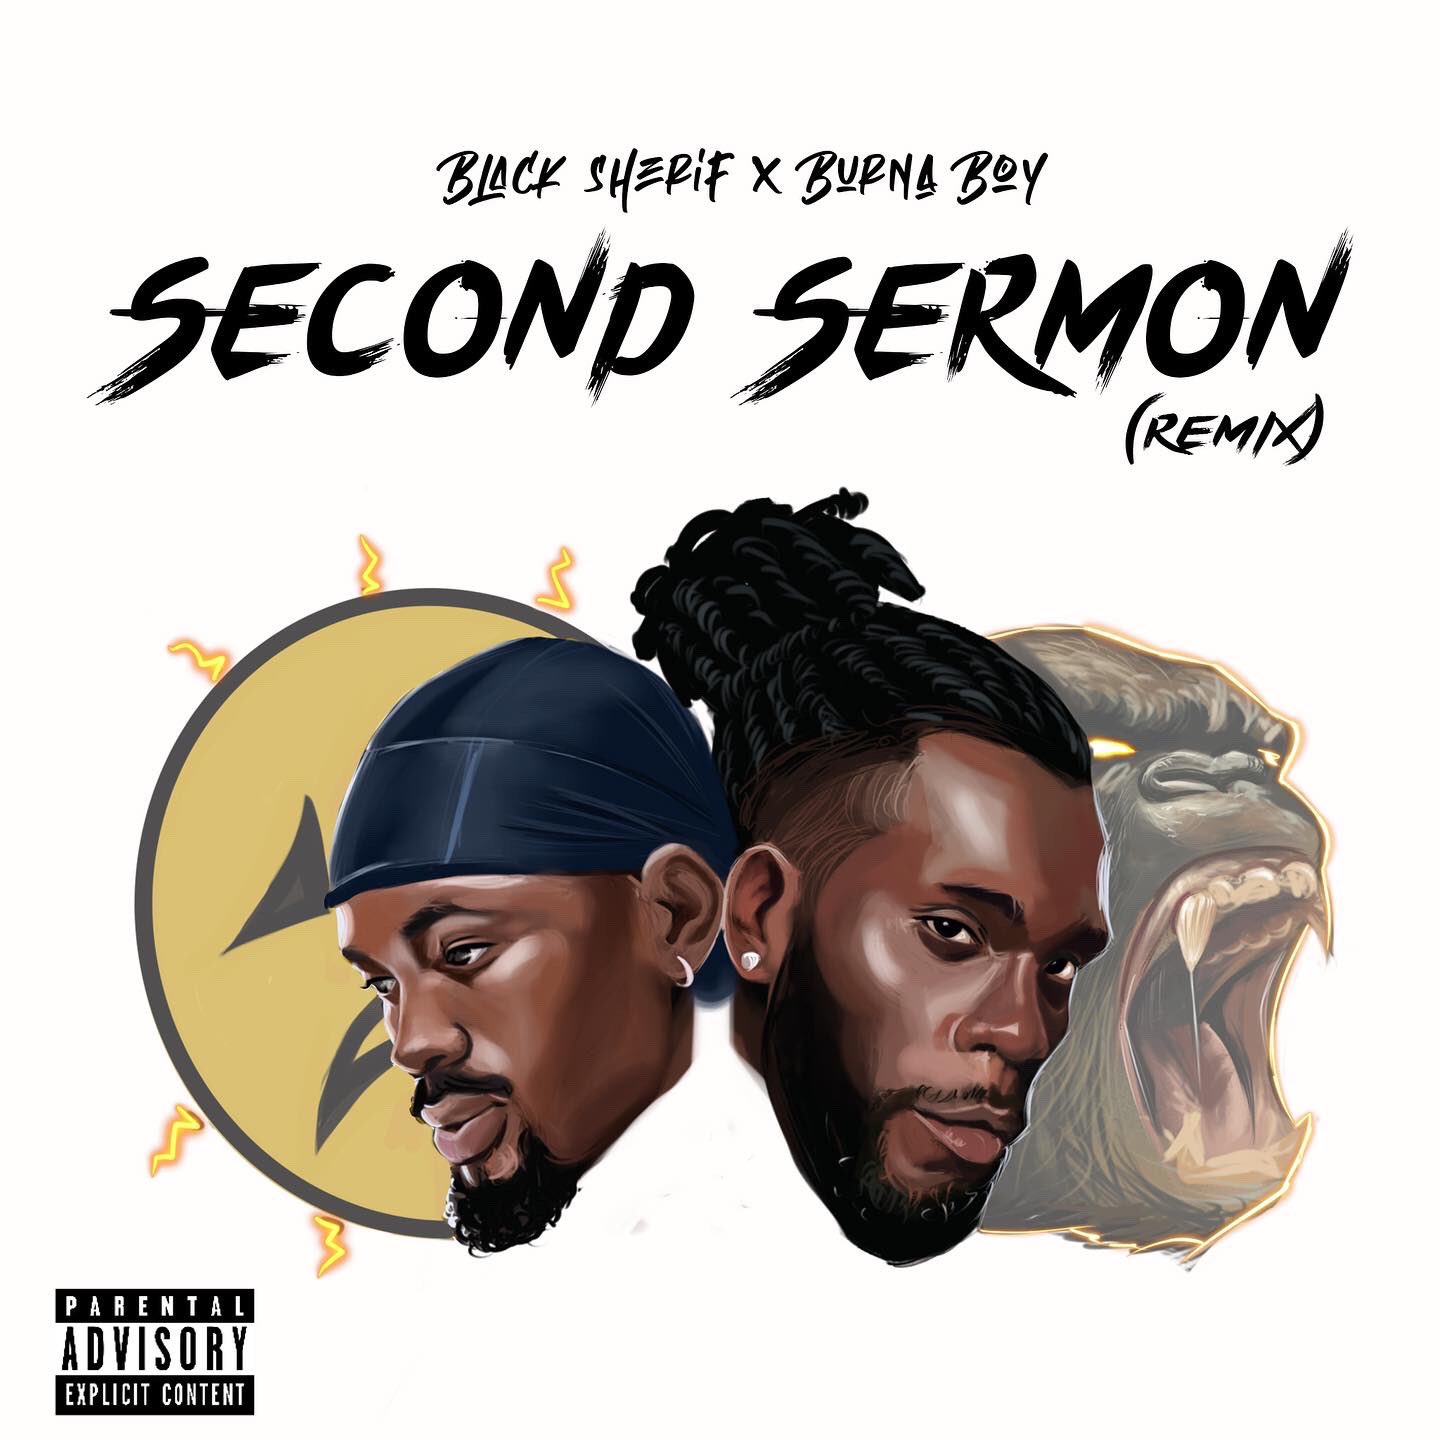 Second sermon remix